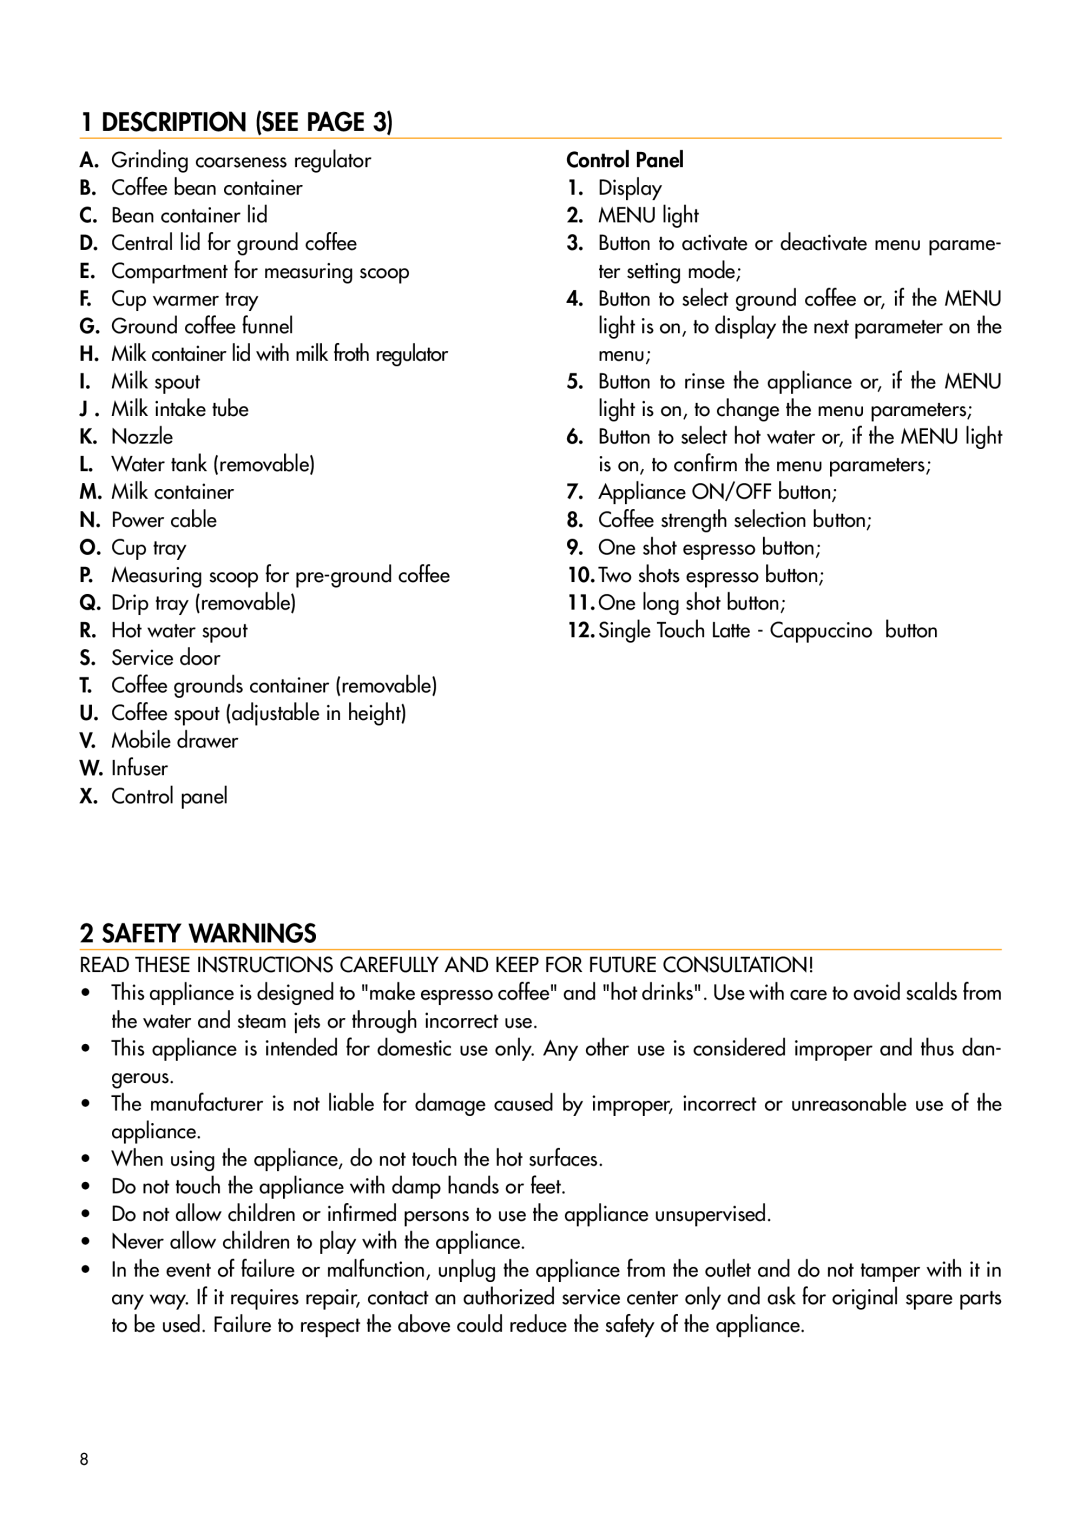 DeLonghi HKKMDI003 manual Description See Page, Safety Warnings 